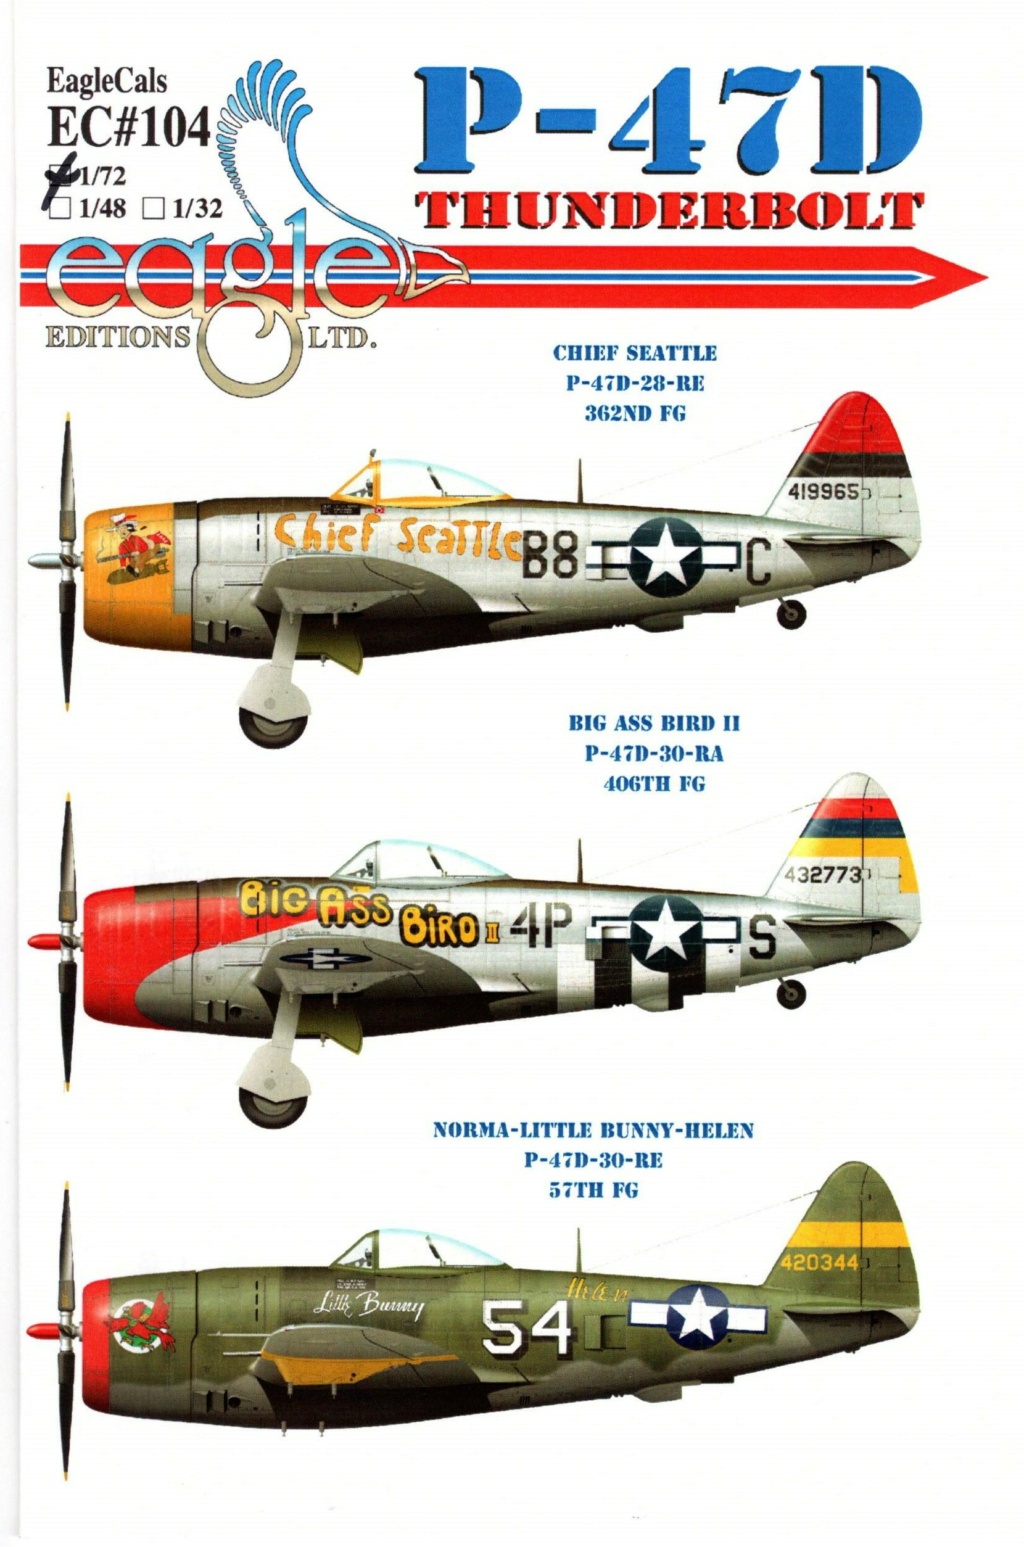 [Academy] 1/72 - Republic P-47D-30 Thunderbolt "Bubbletop"  - USAF 57th FG - Terrain : Alto (Haute-Corse) 1944 P-47d_11